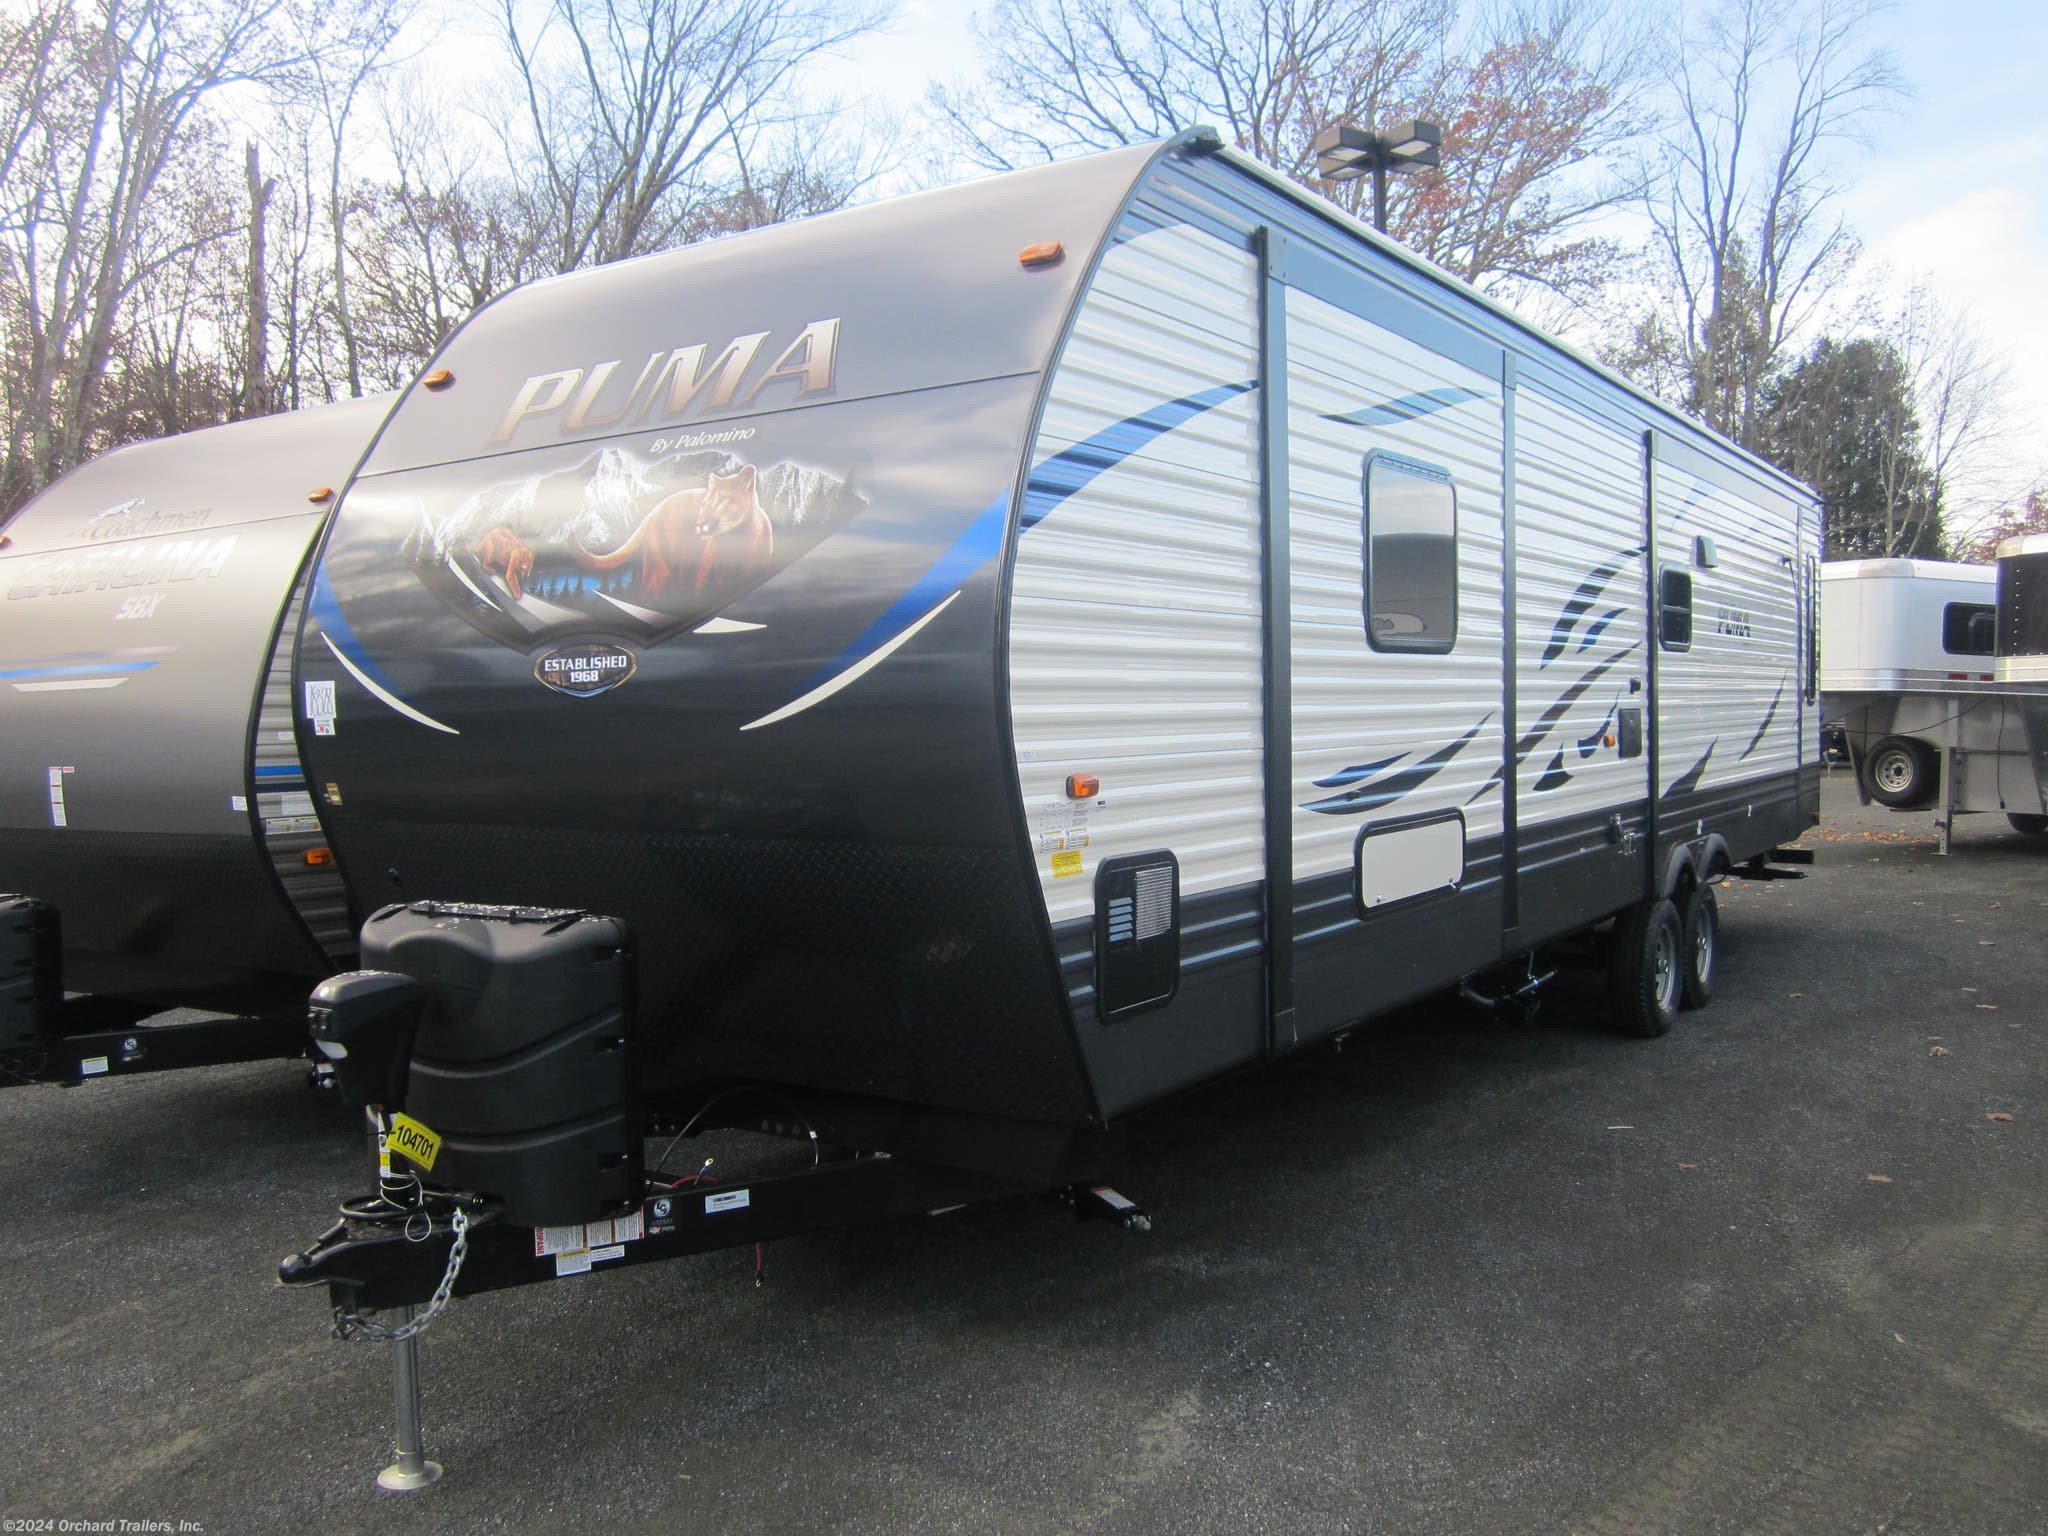 palomino travel trailer dealers